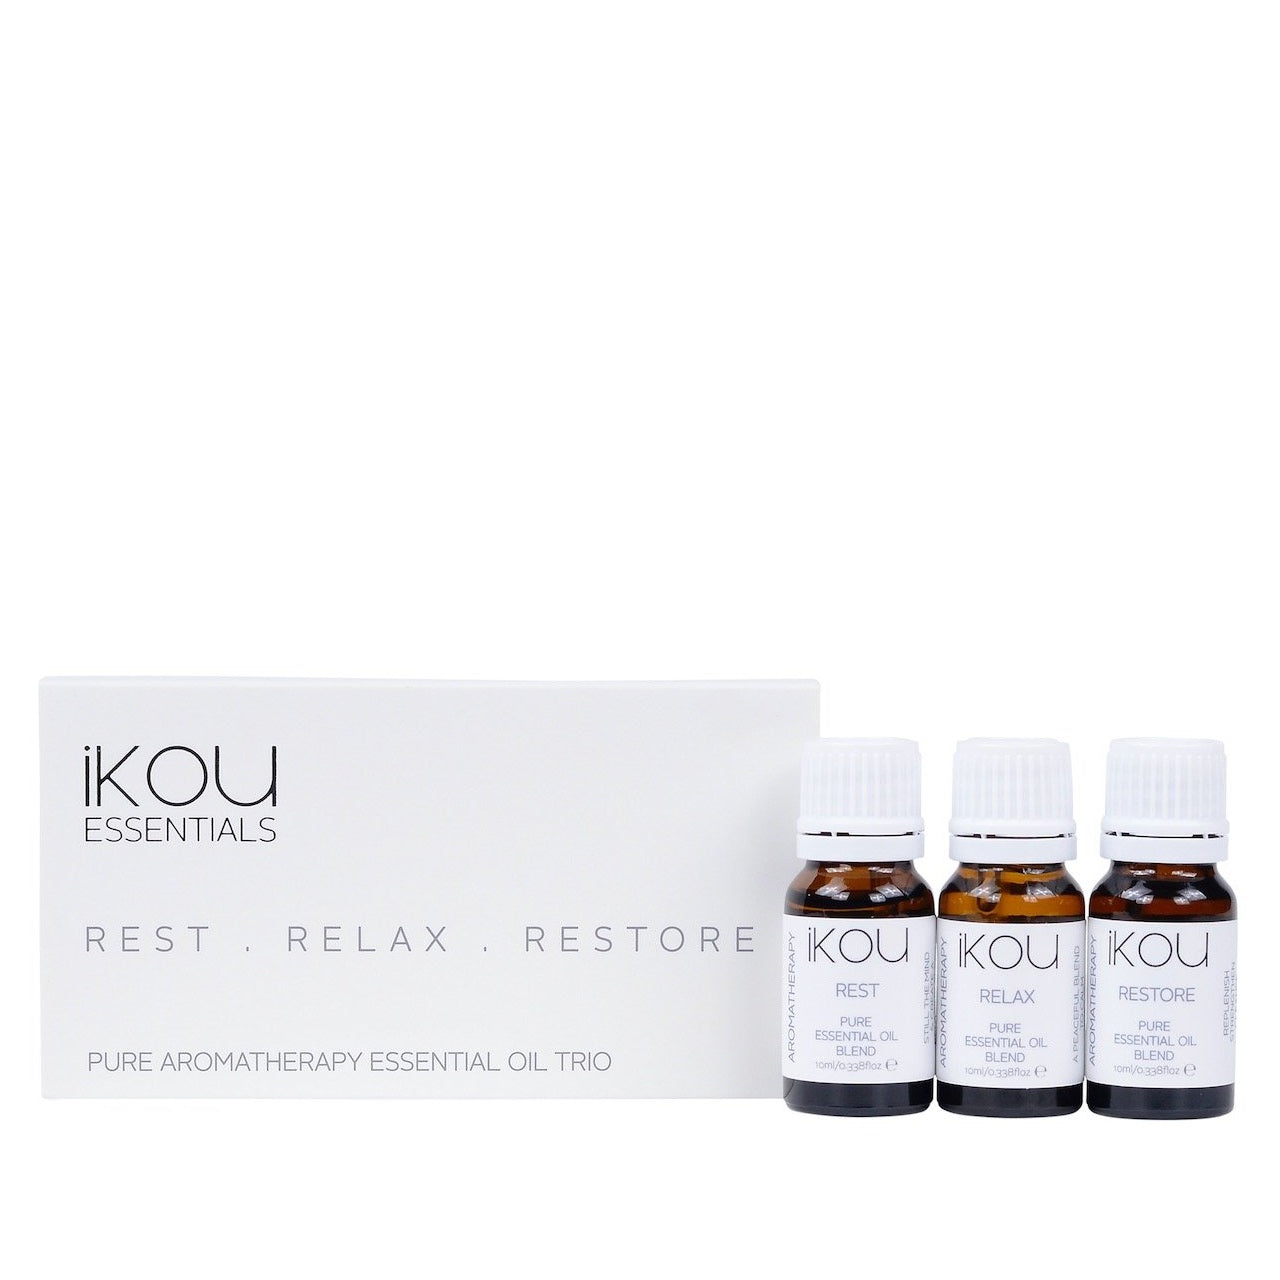 Essential Oil Trio | Rest, Relax & Restore Pure aromatherapy essential oil trio 3x10ml